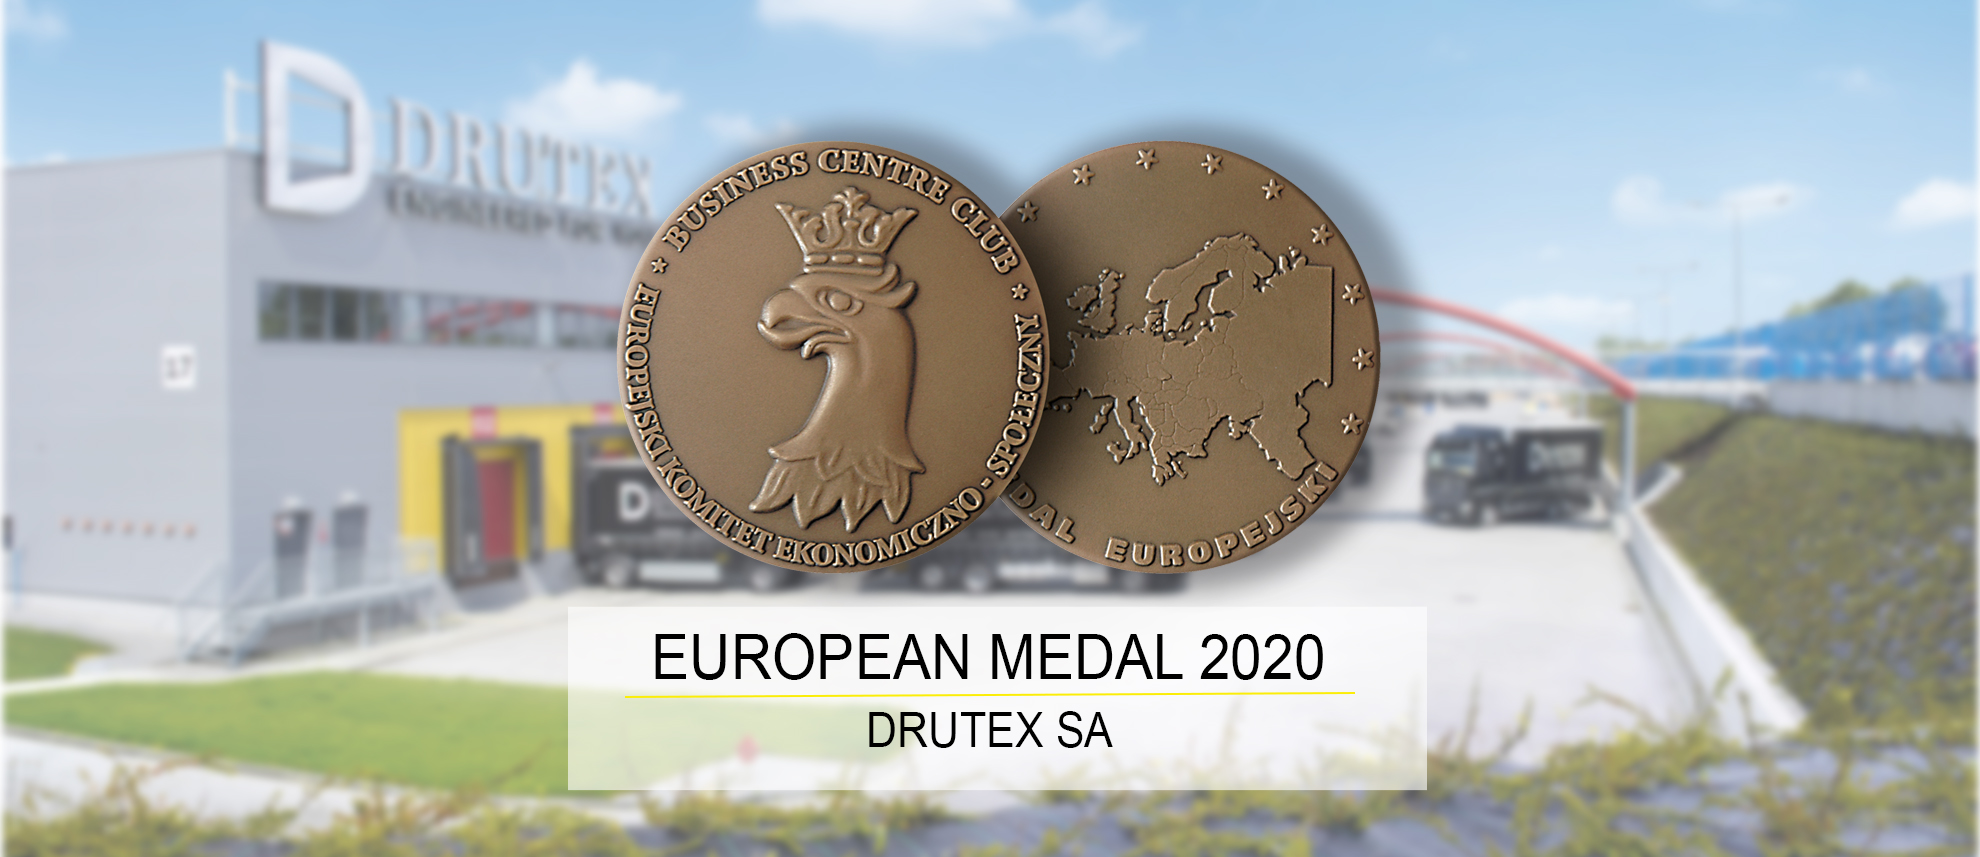 Drutex awarded the European Medal